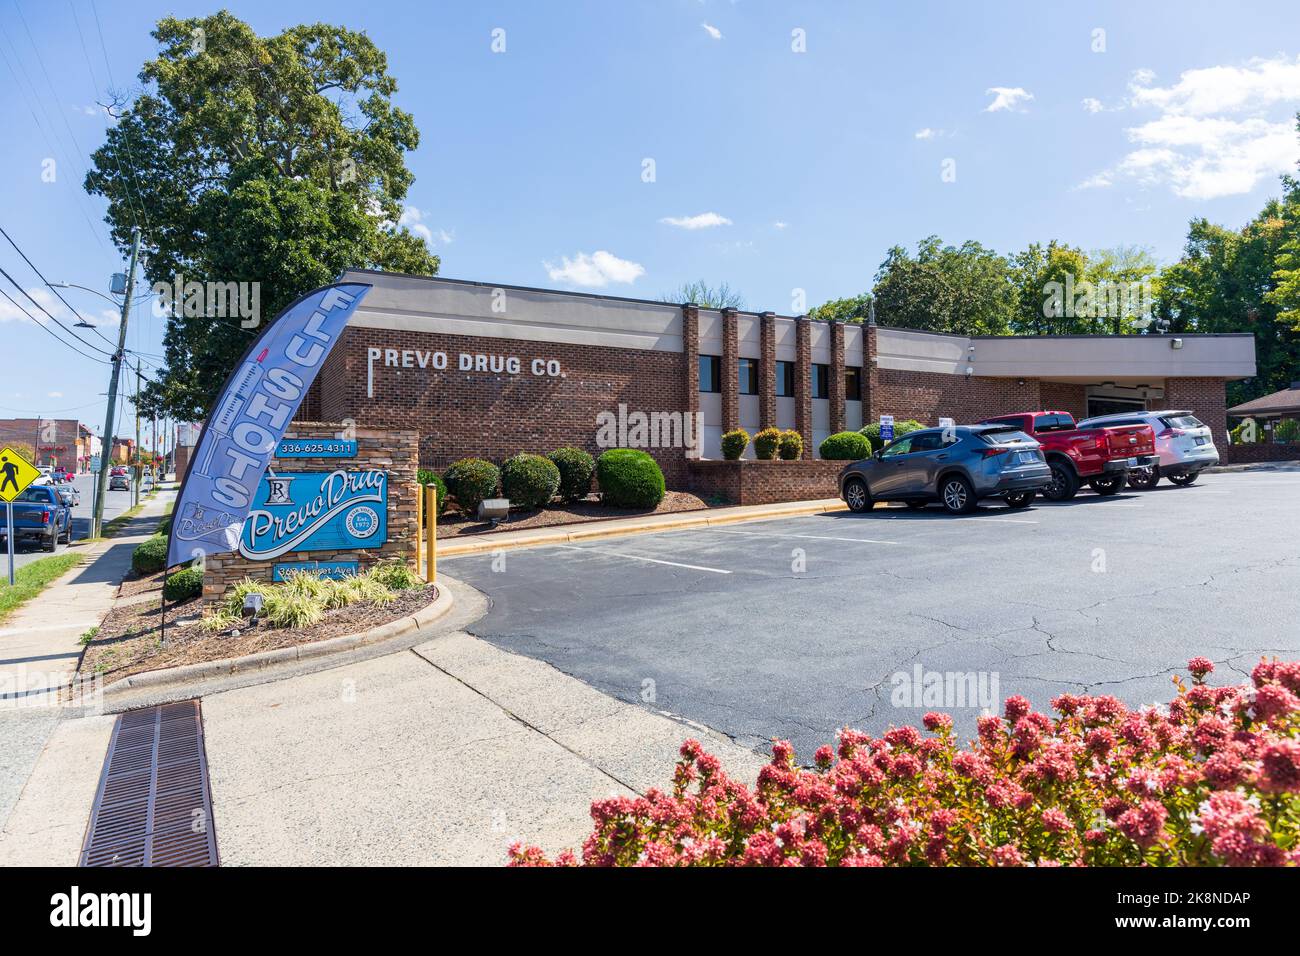 ASHEBORO, NC, USA-26 SEPT 2022: Prevo Drug Company, edificio, letrero y estacionamiento. Foto de stock